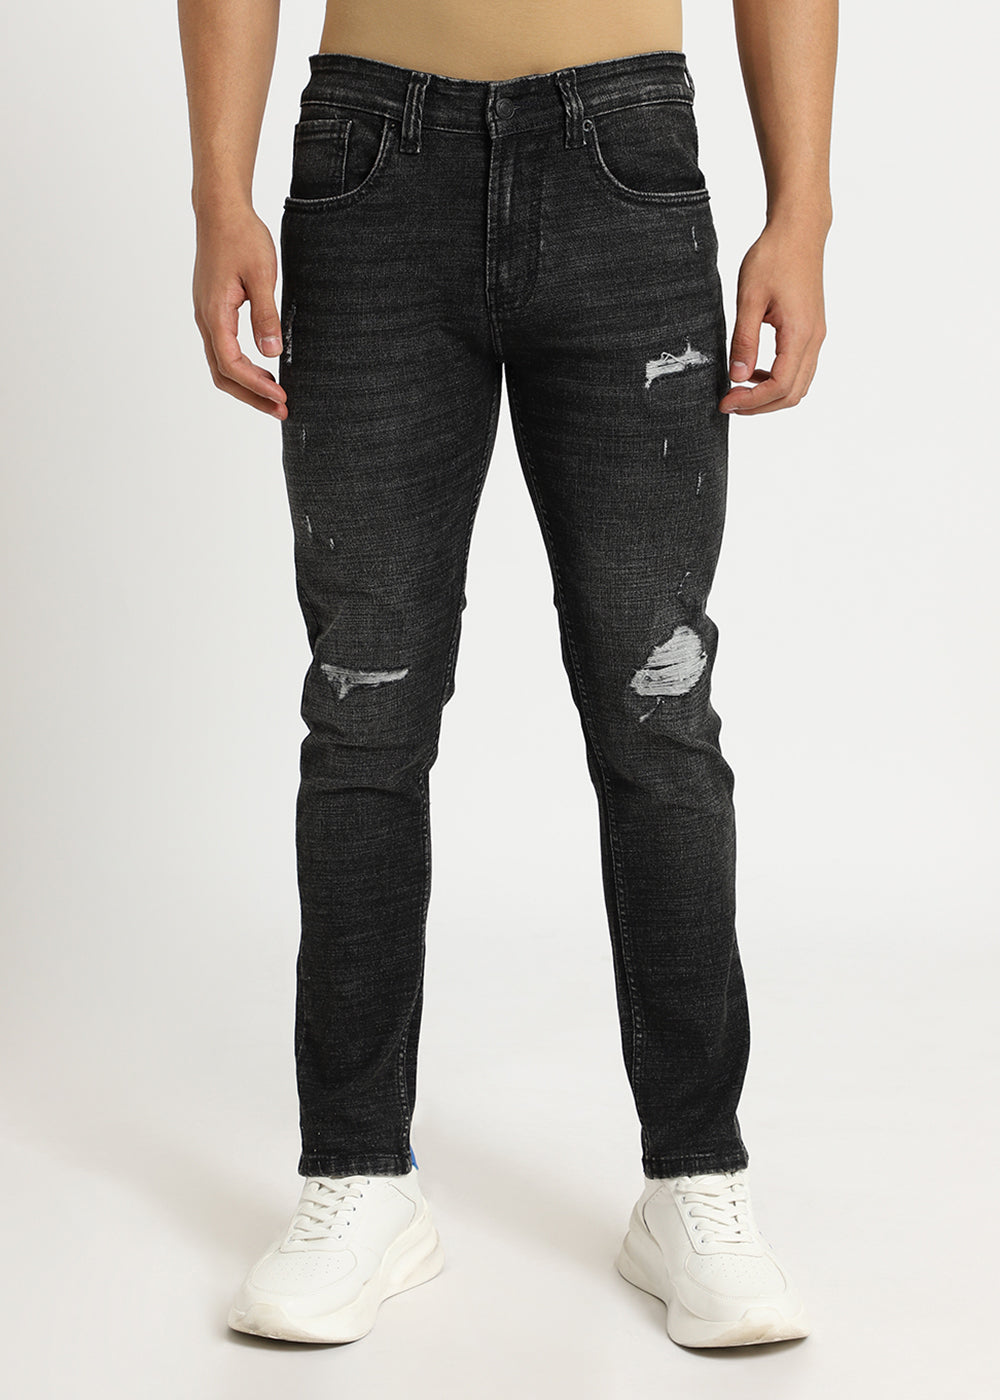 Graphite Fade Slim Fit Jeans